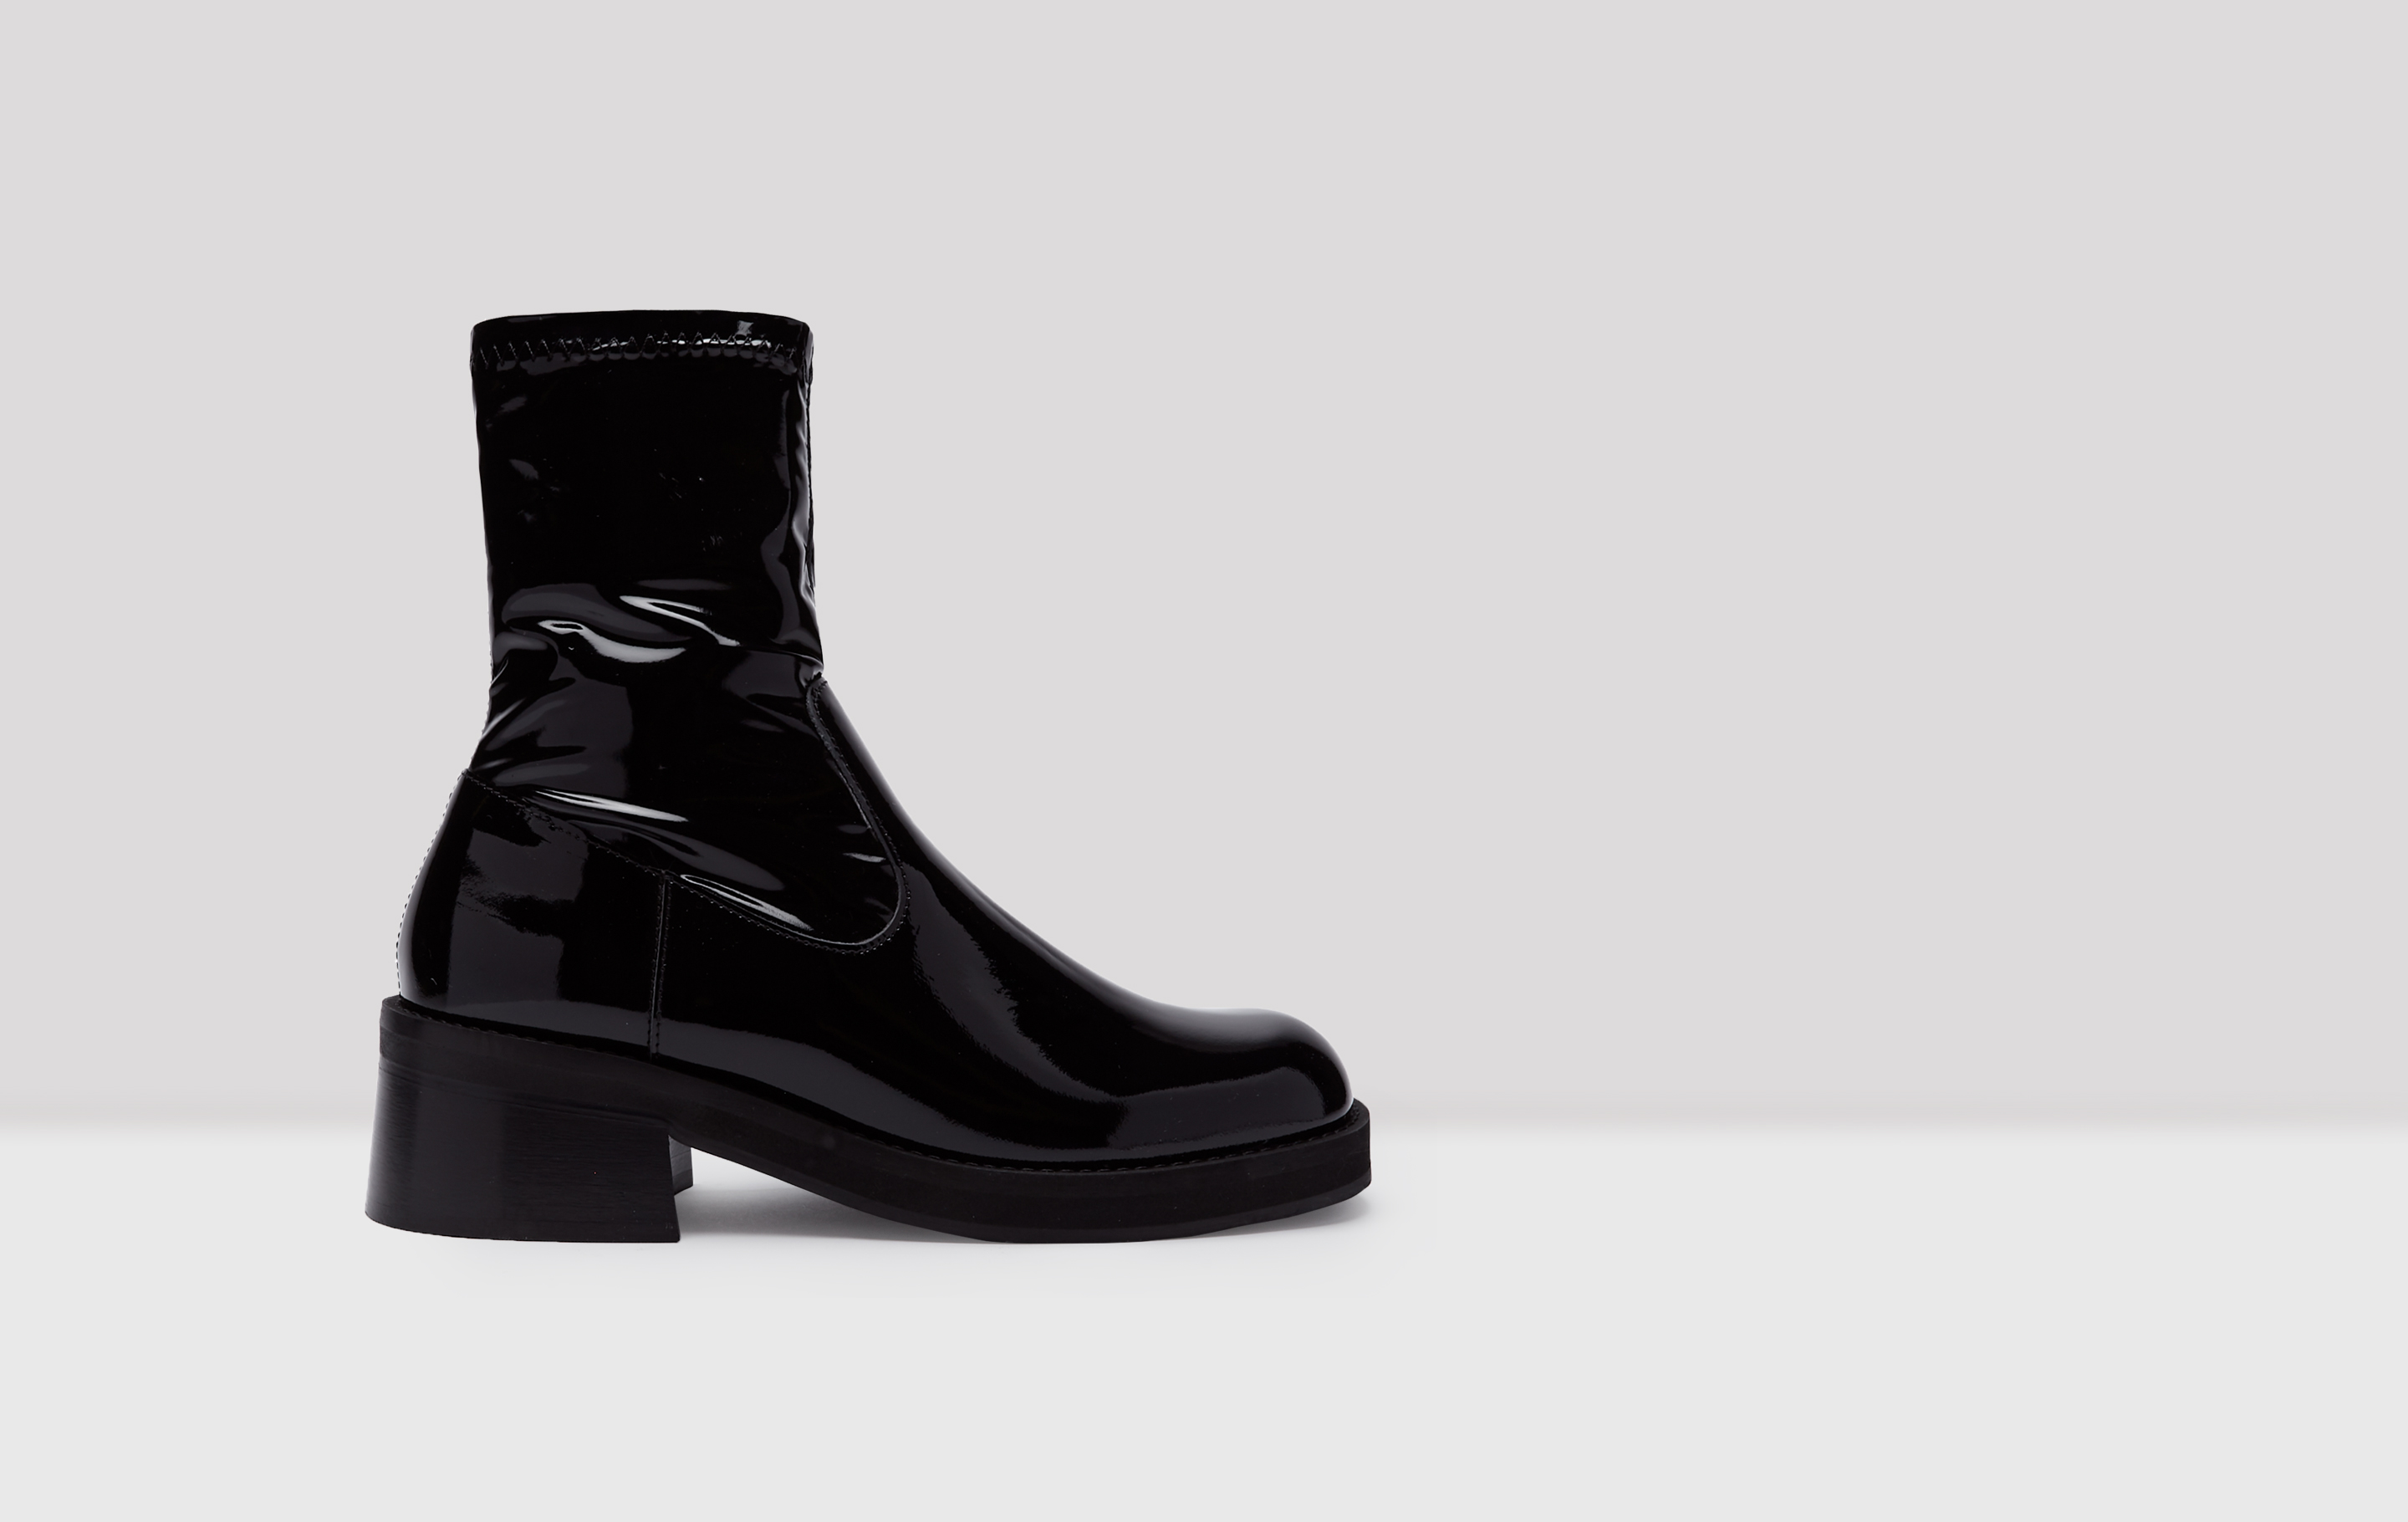 Oliana Black Patent Leather Boots // E8 